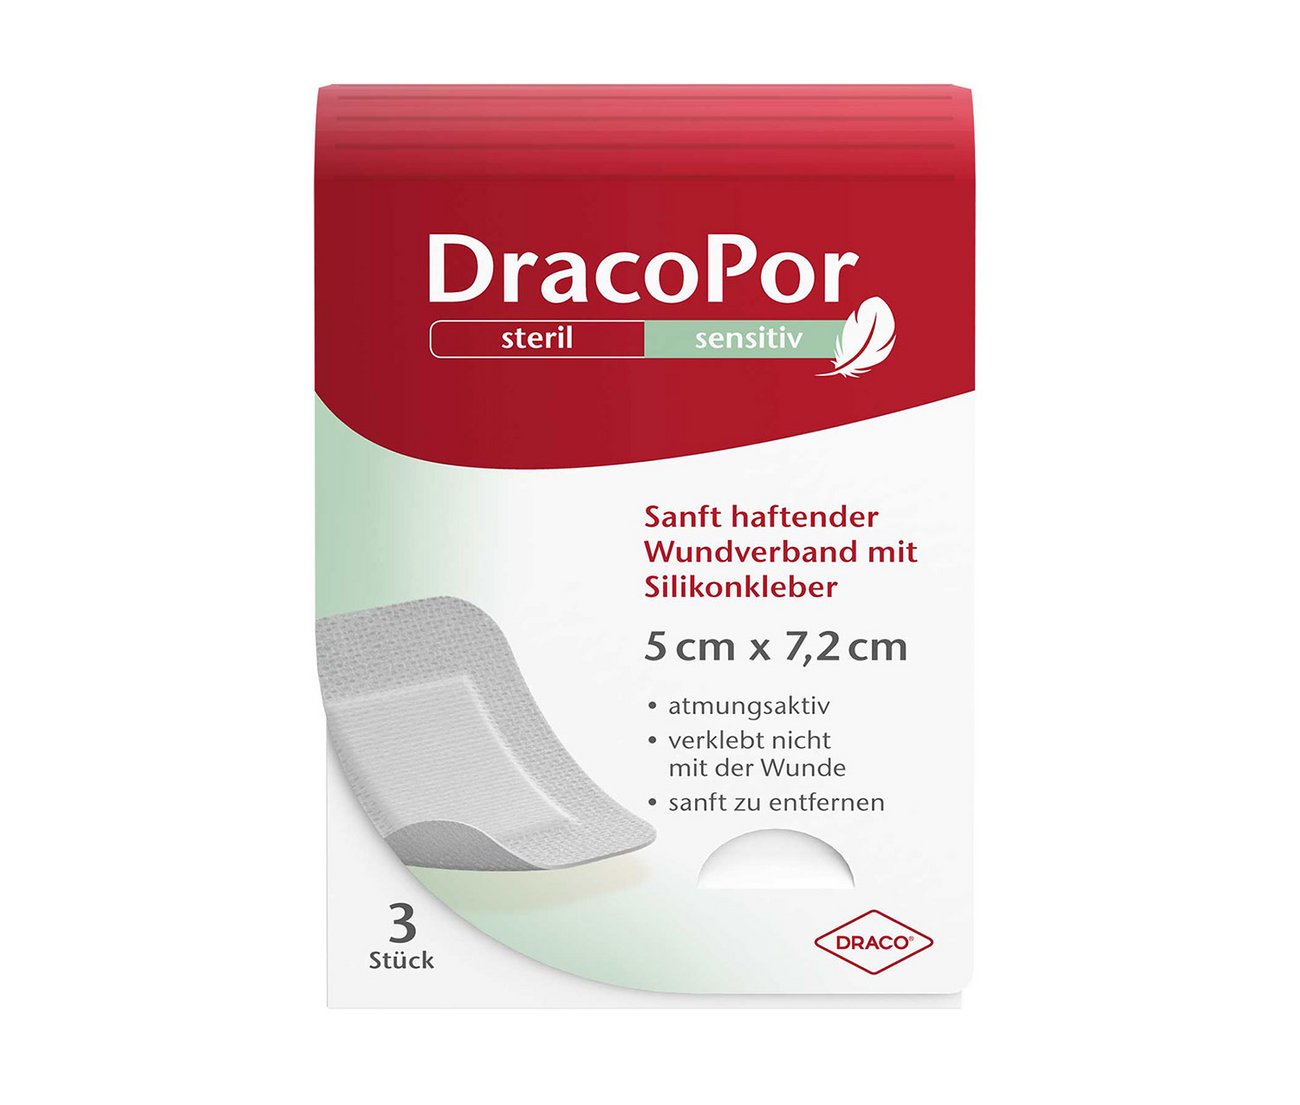 DracoPor sensitiv – Kleine Größe